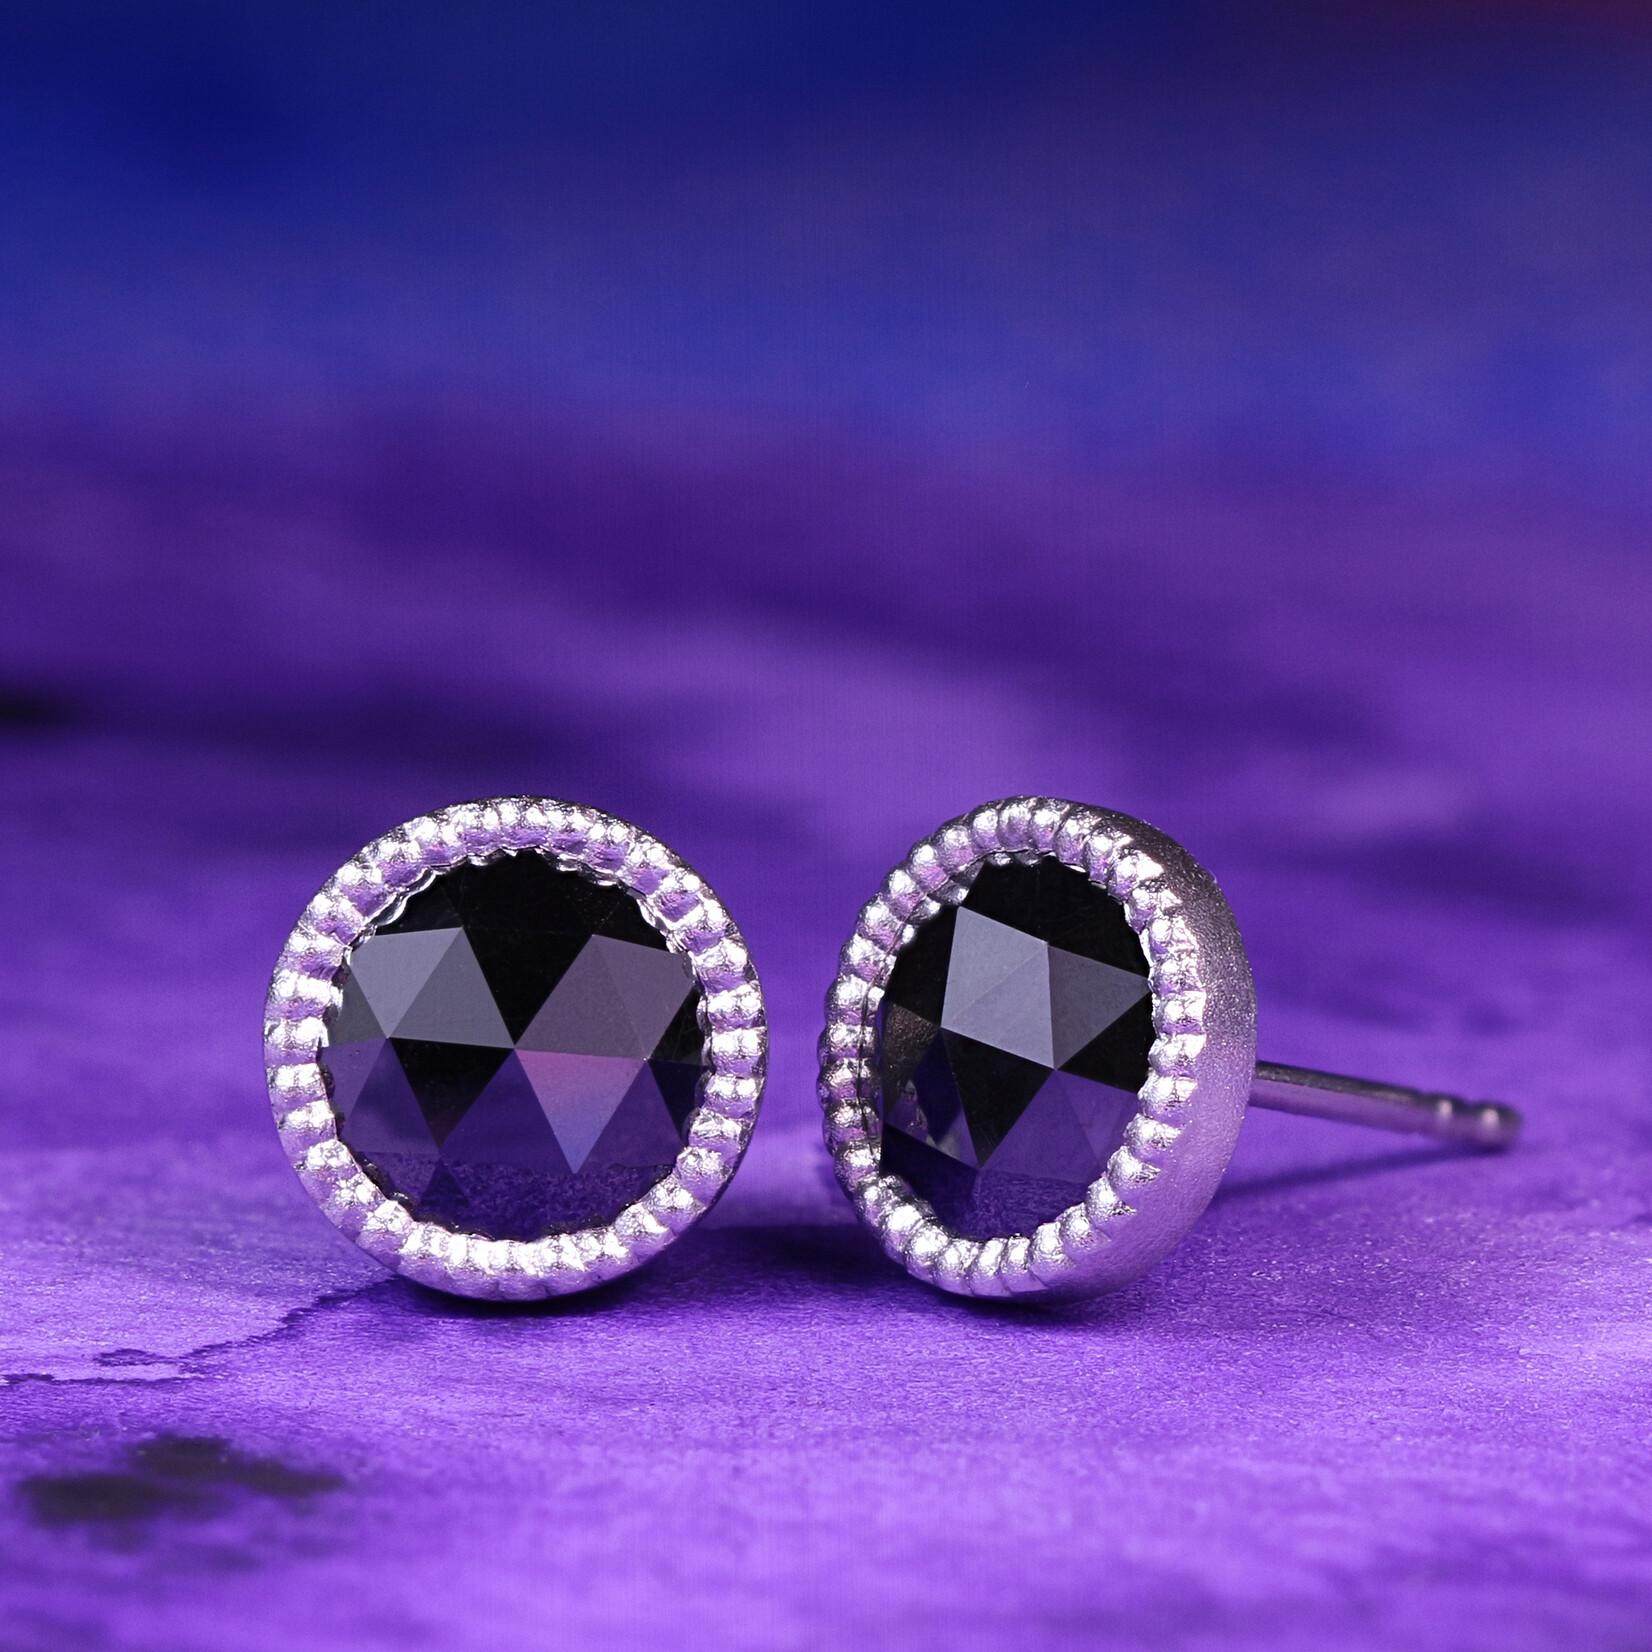 Baxter Moerman Rose Cut Black Diamond Stud Earrings - 7mm